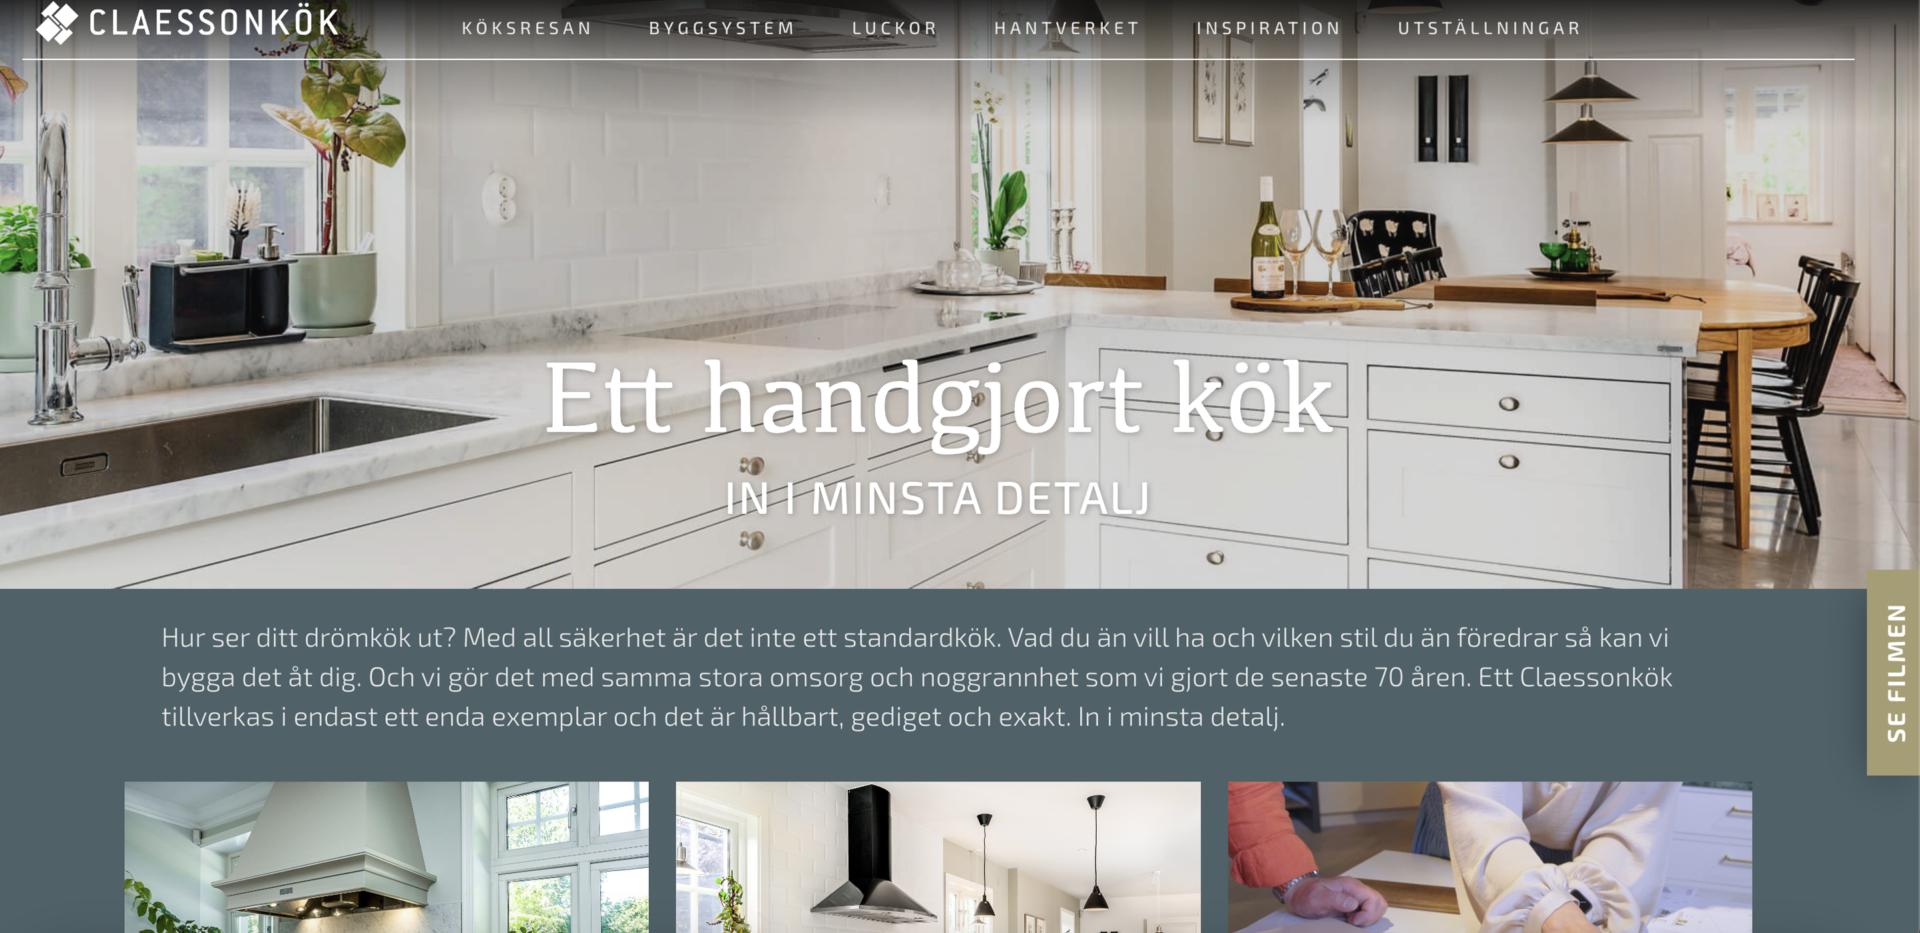 Claessonkök website's demo picture.